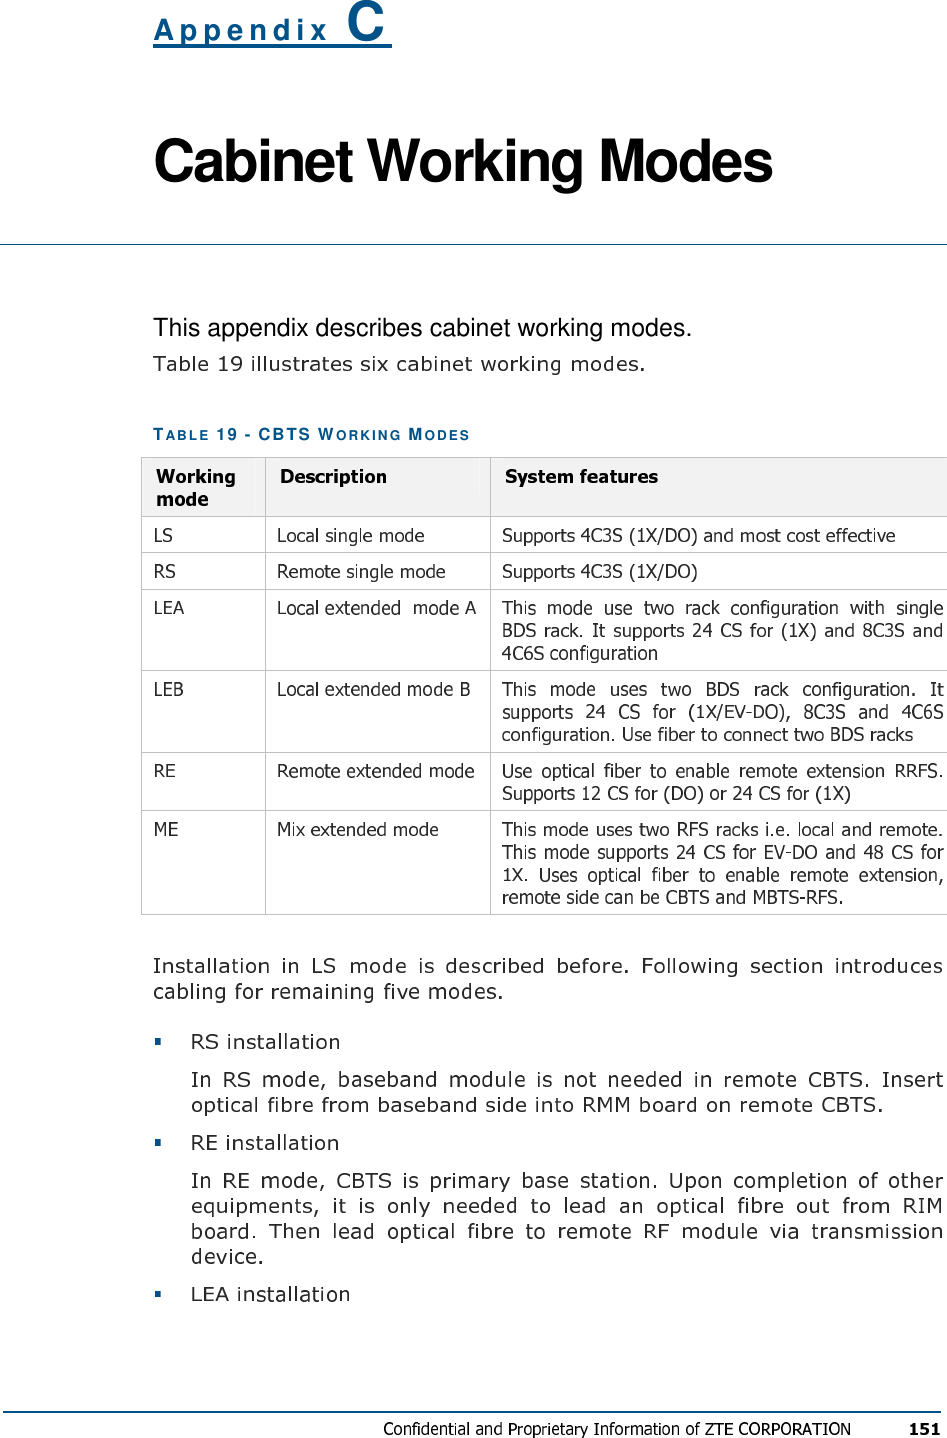 A p p e n d i x   C Cabinet Working Modes  This appendix describes cabinet working modes. TABL E  19 - CBTS WOR K IN G  MOD E S     